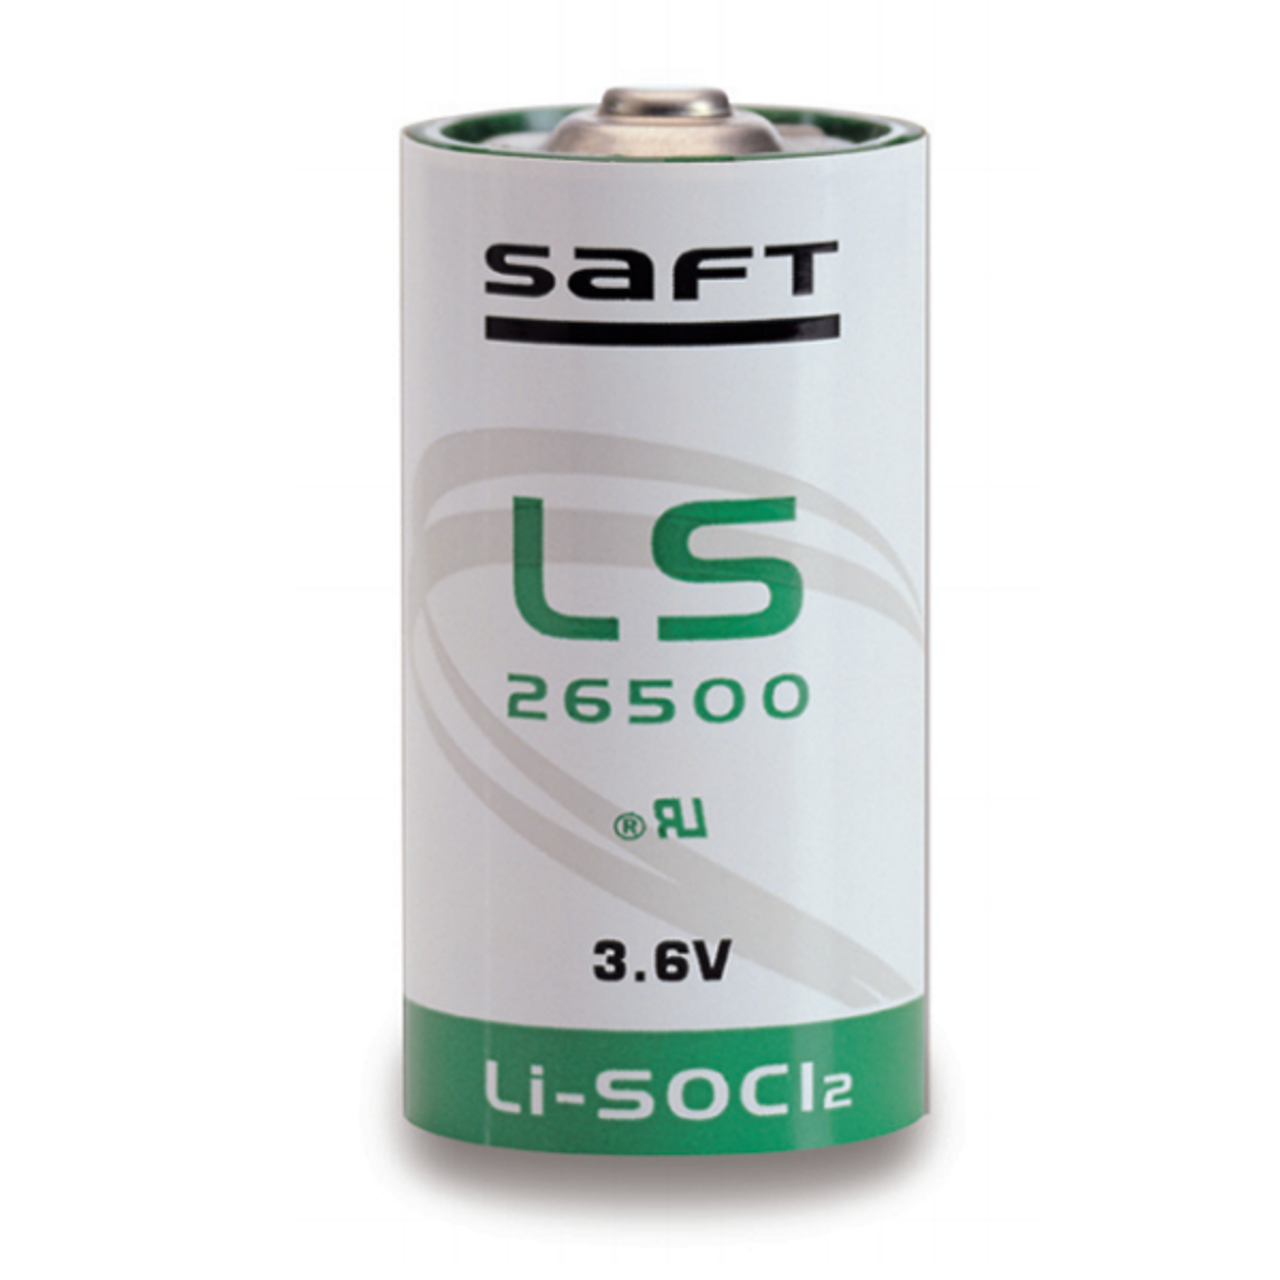 Siemens 150U Battery-Simatic S5 Controller-3.6V Lithium C Cell Li-SOCI2 Lithium Sulfer Dioxide